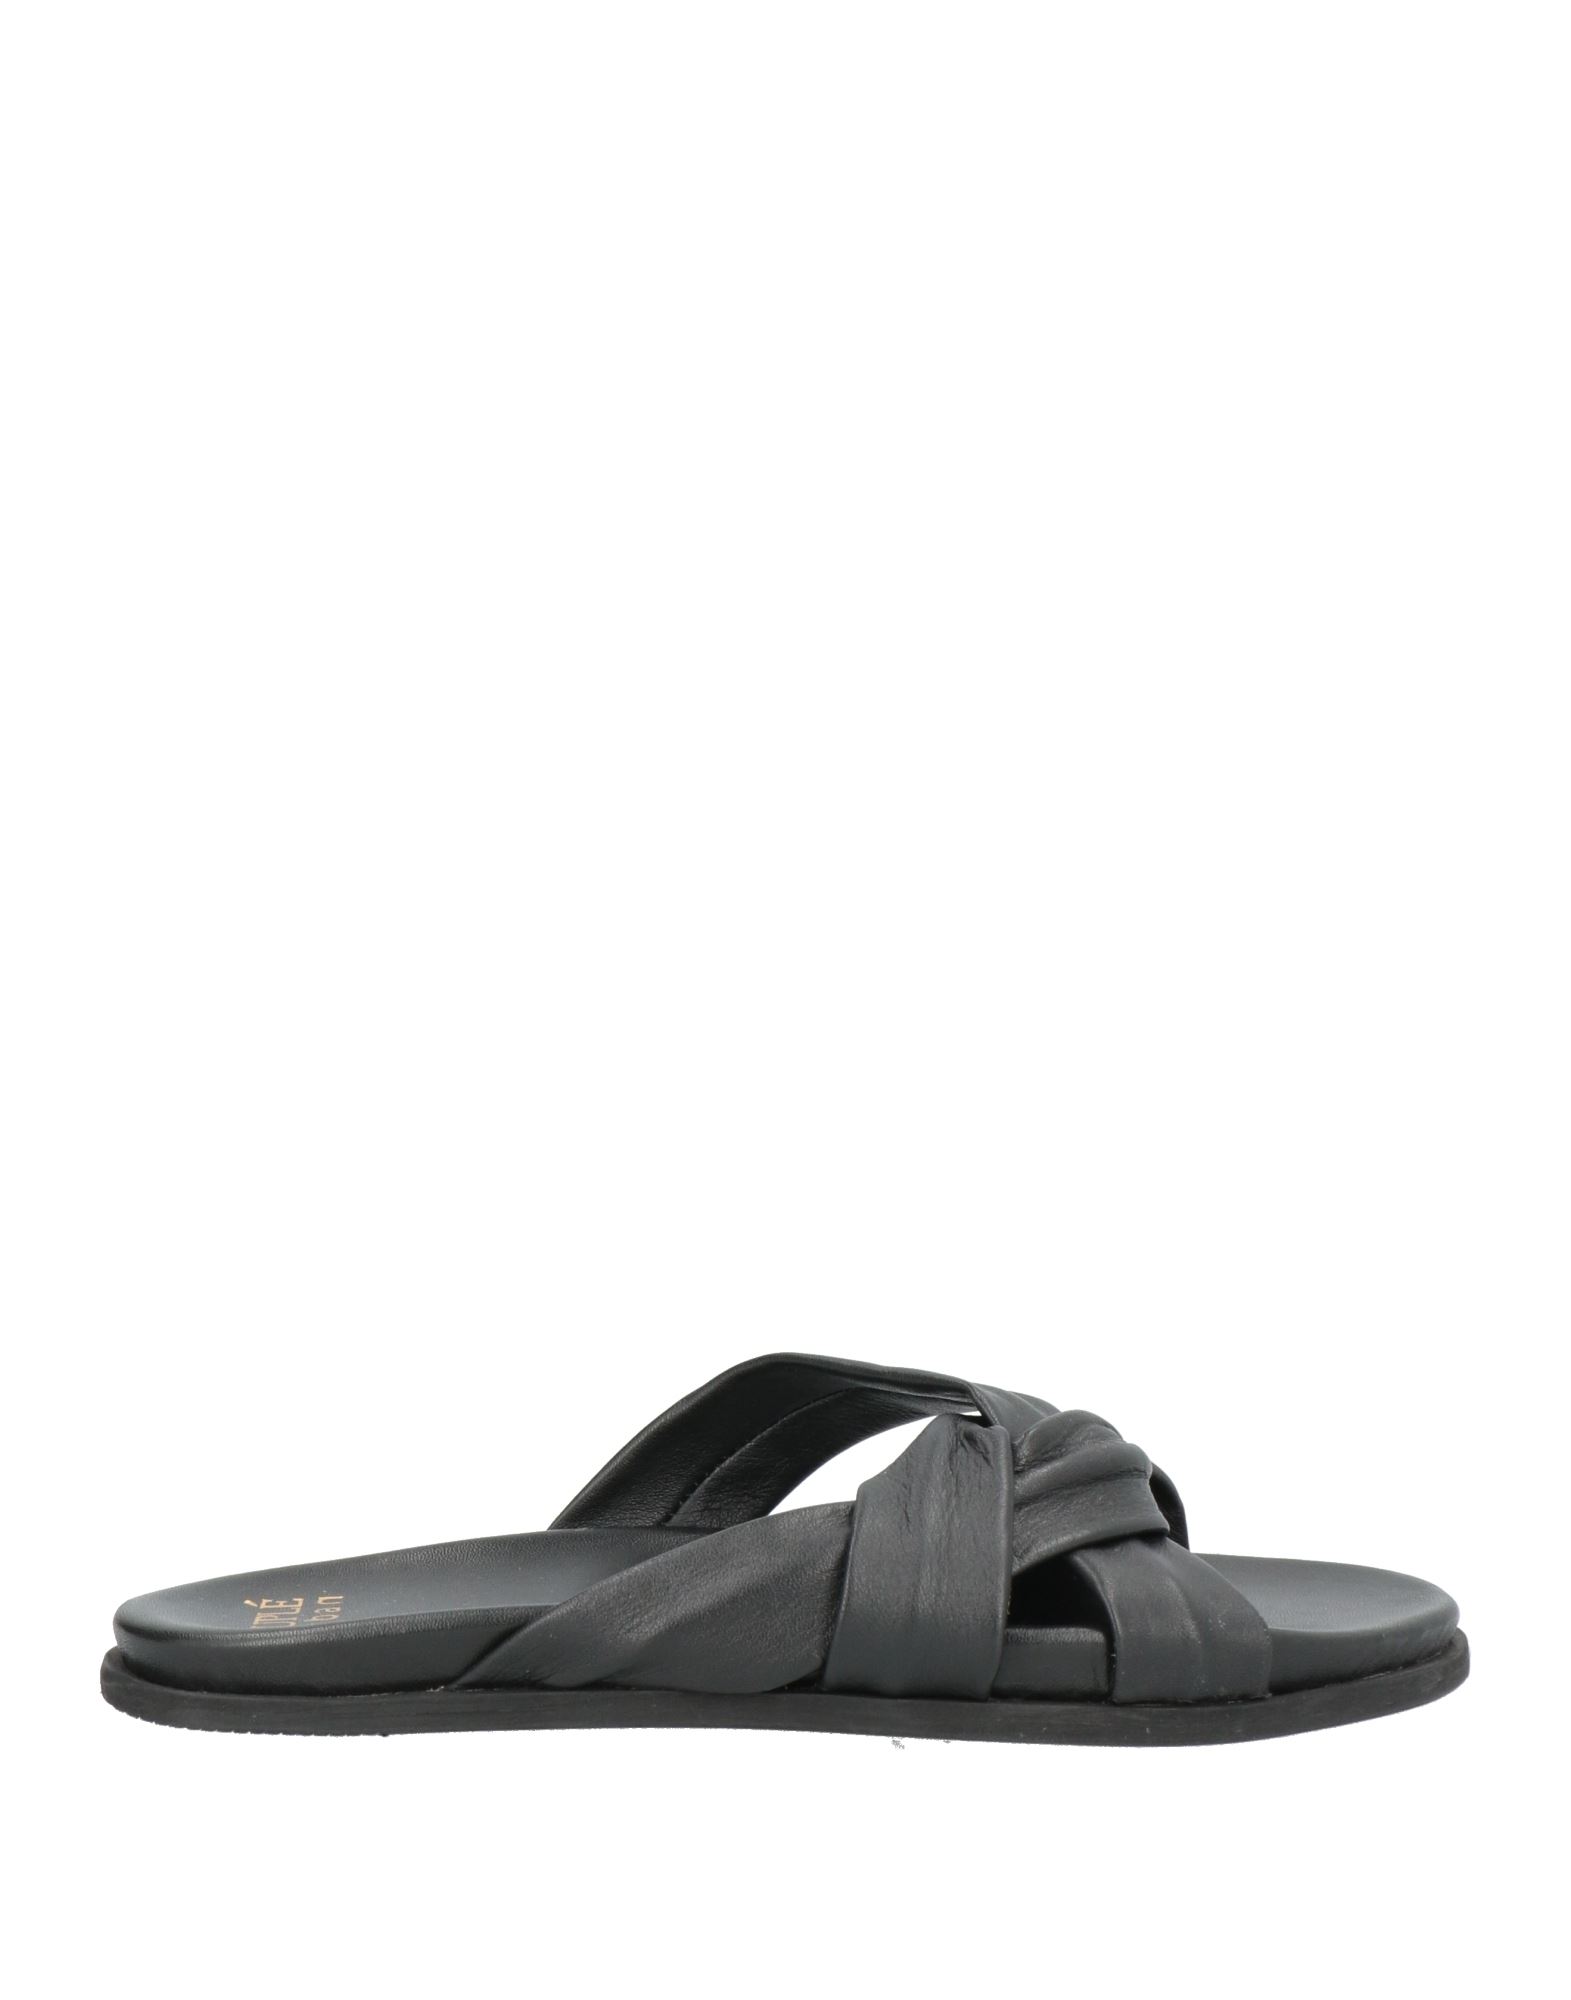 Cuplé Sandals In Black